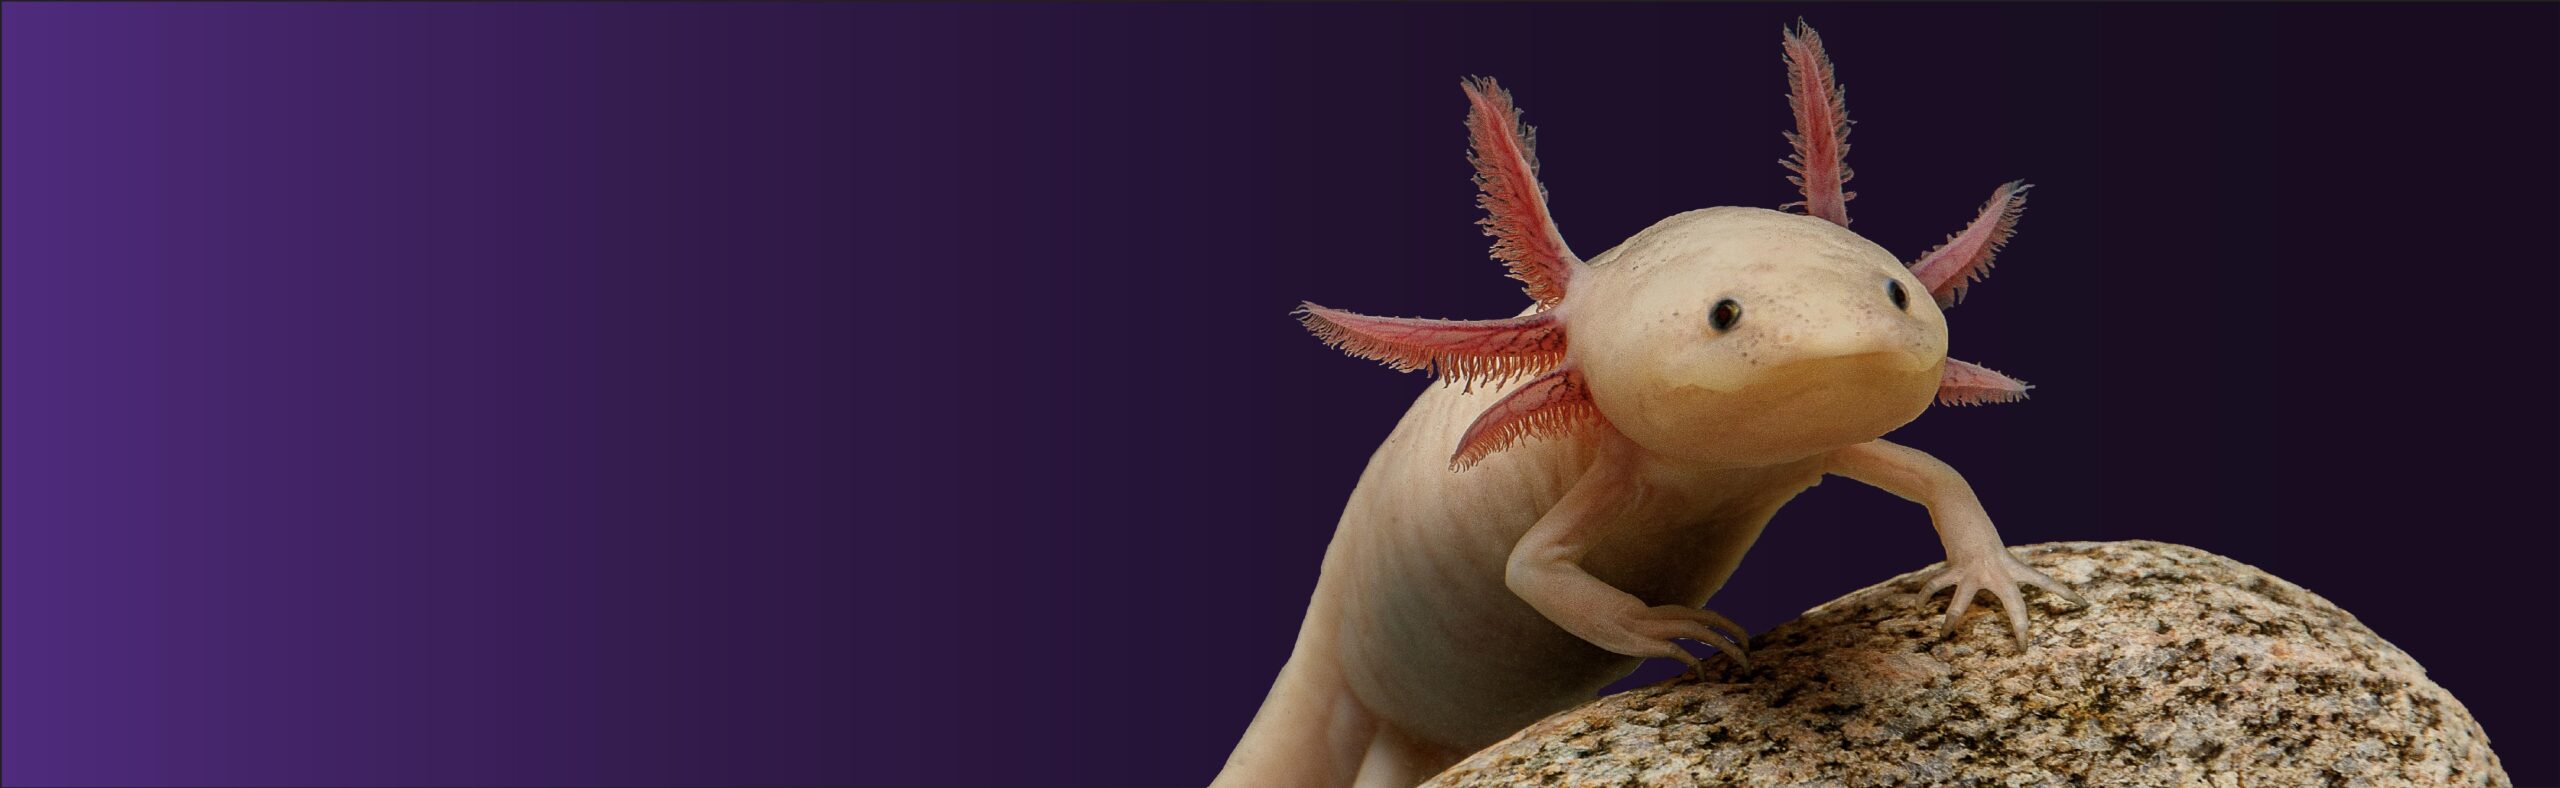 axolotl on rock_desktop